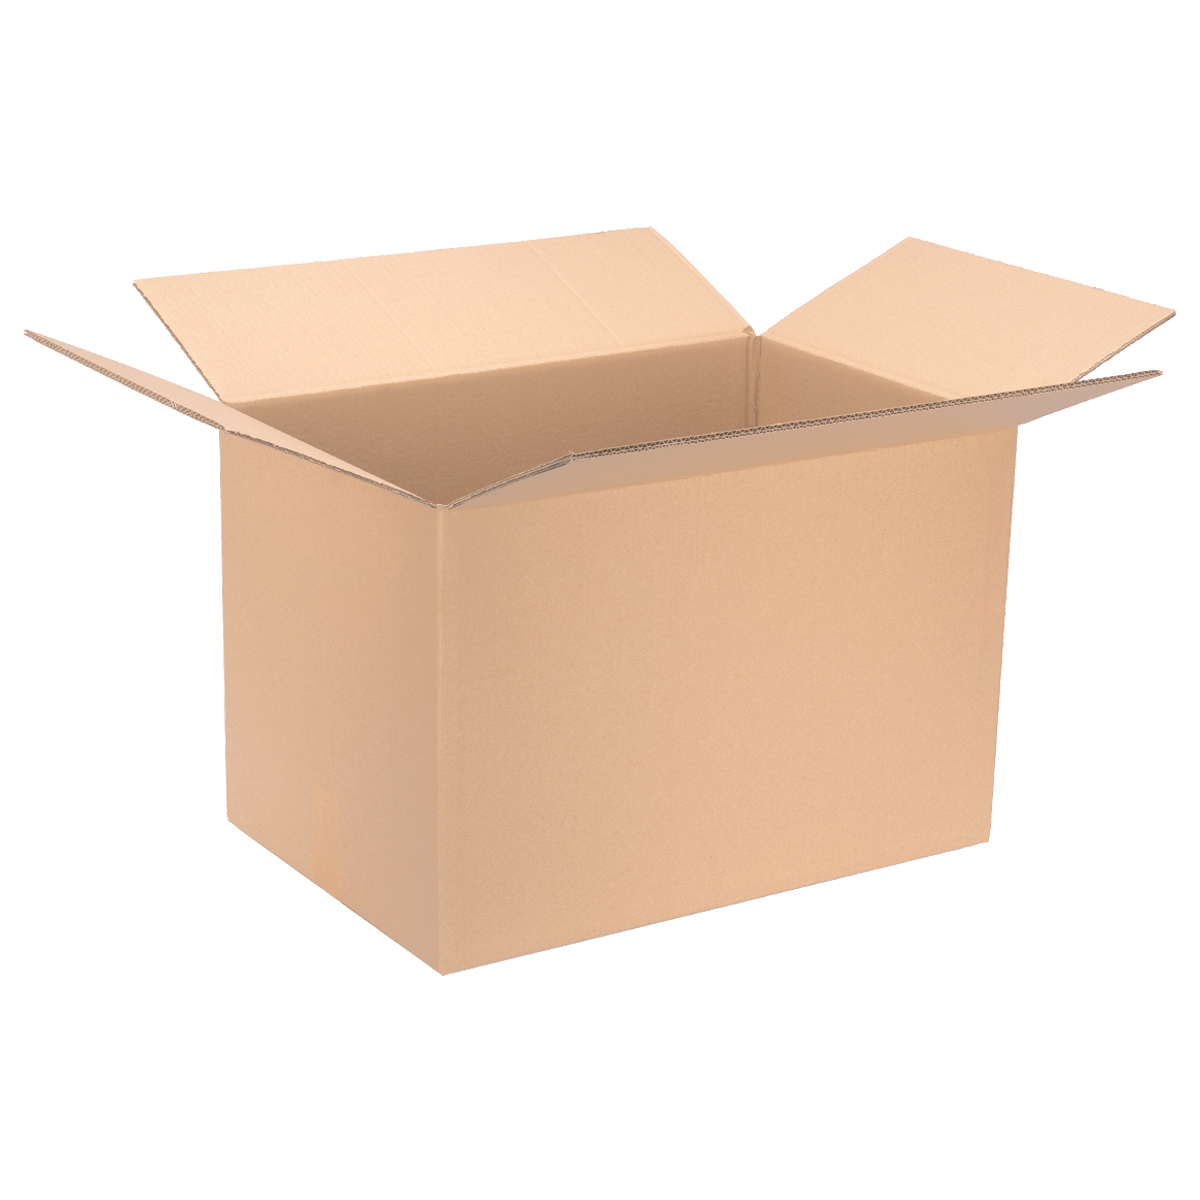 Cardboard box, double wall, 600x400x400 mm - KK 107